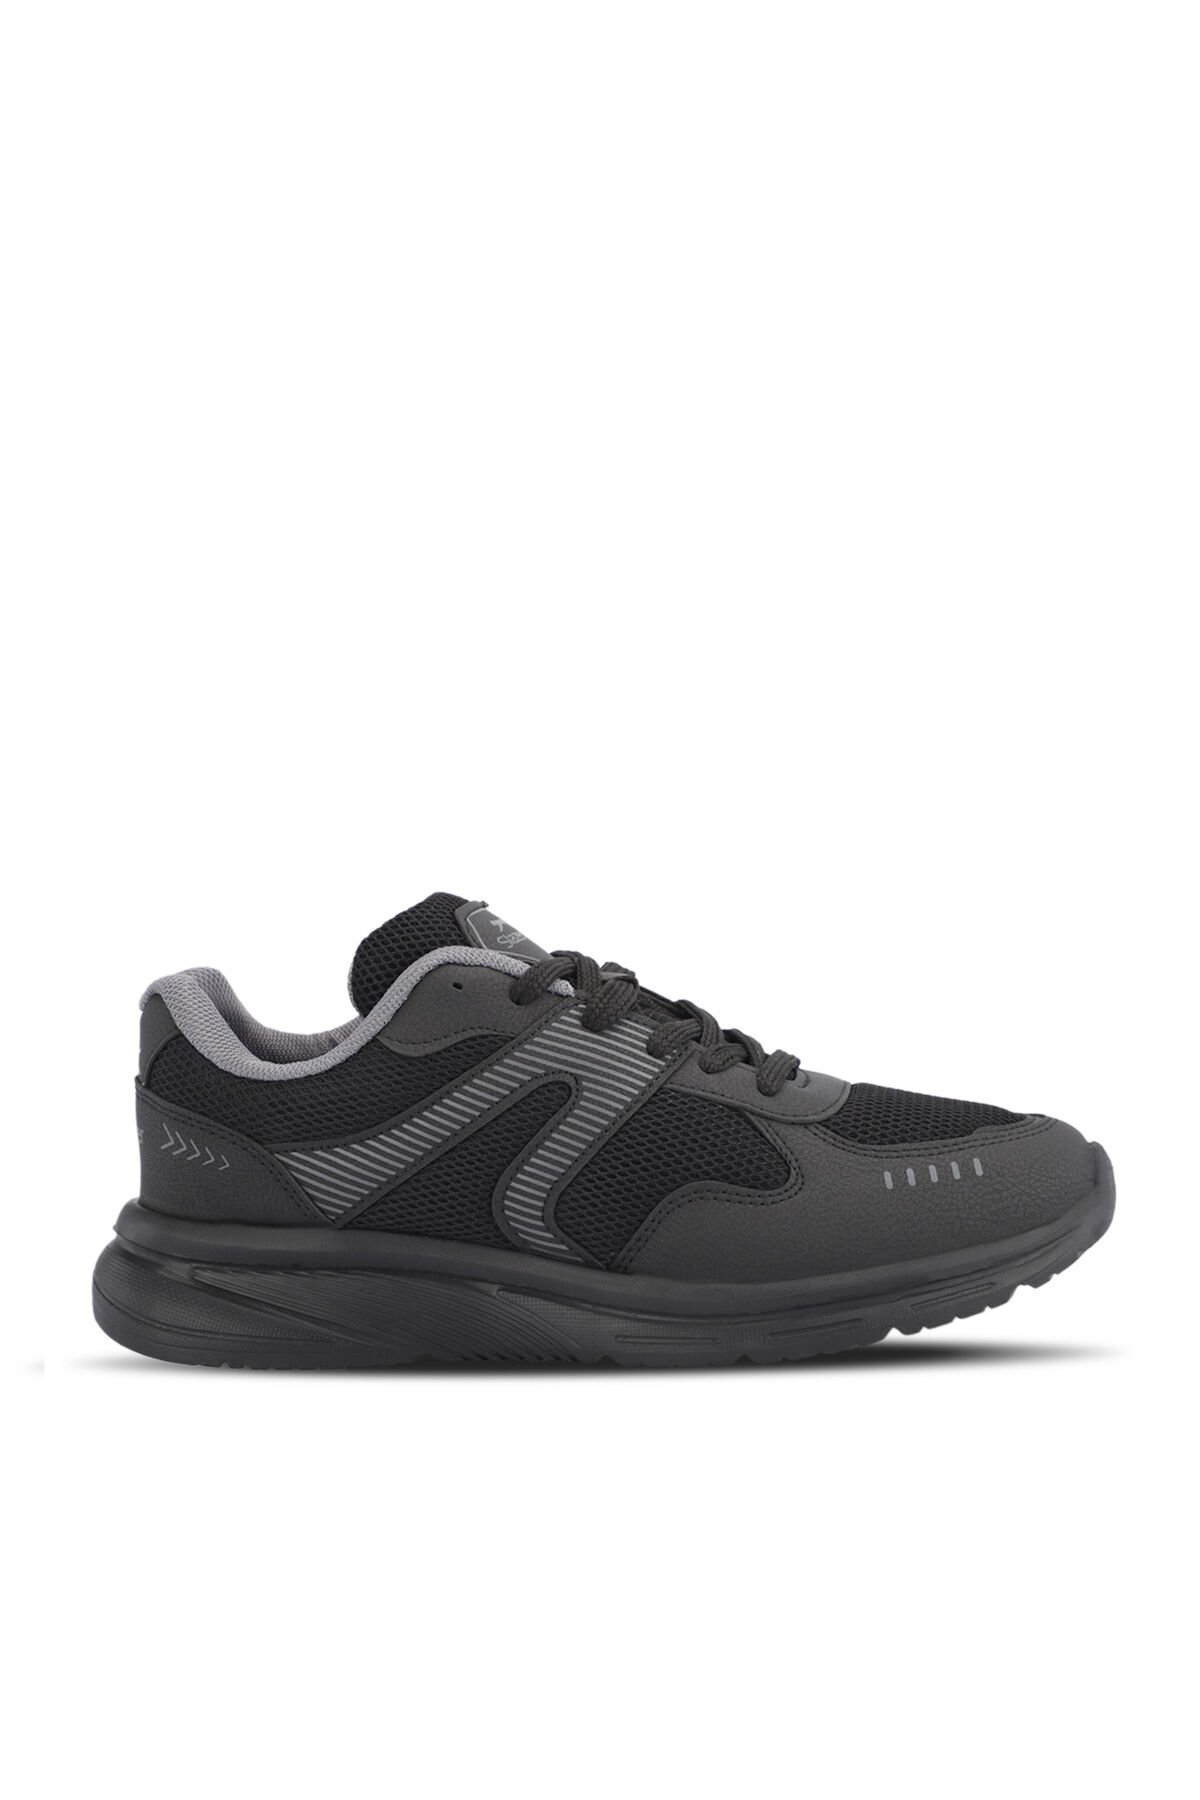 MADDY I Sneaker Kadın Ayakkabı Siyah / Siyah - Thumbnail